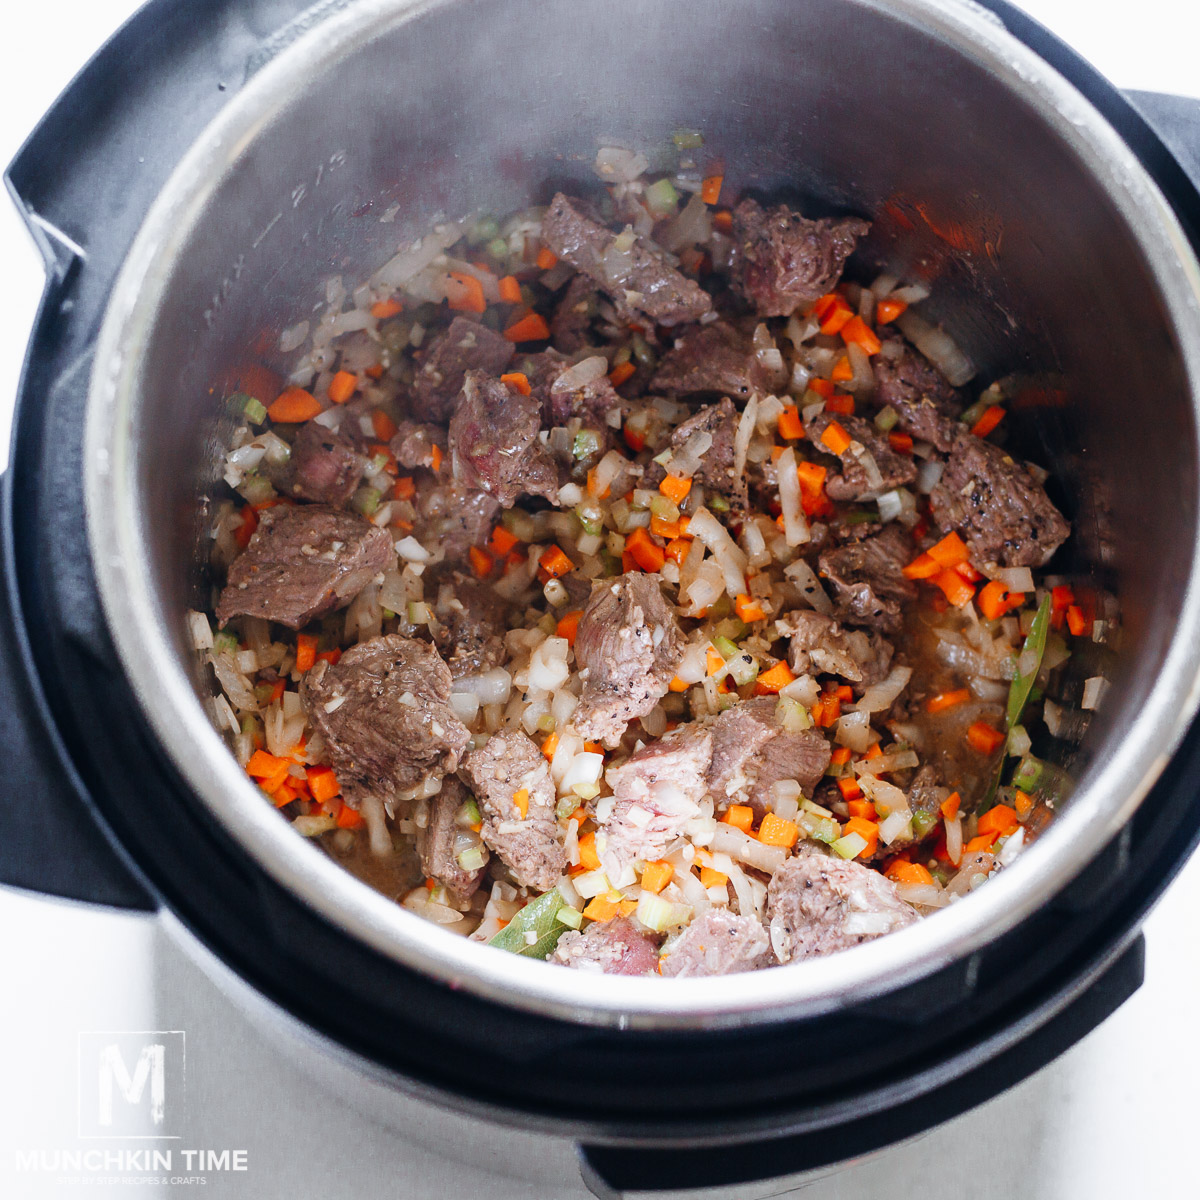 Instant Pot saute veggies with beef.